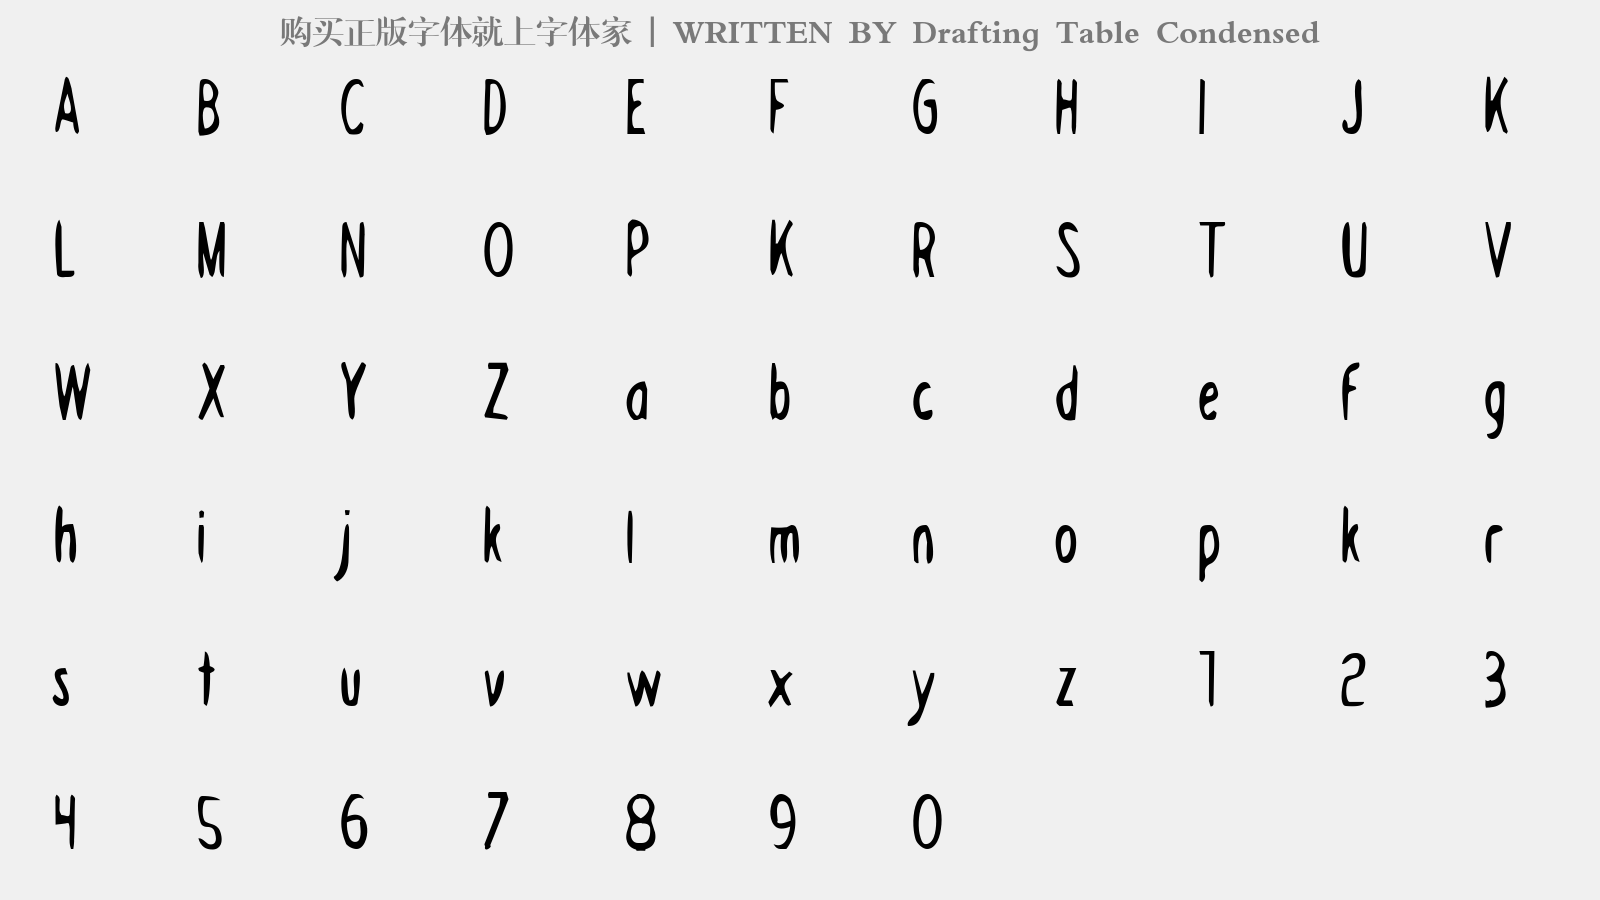 Drafting Table Condensed - 大写字母/小写字母/数字